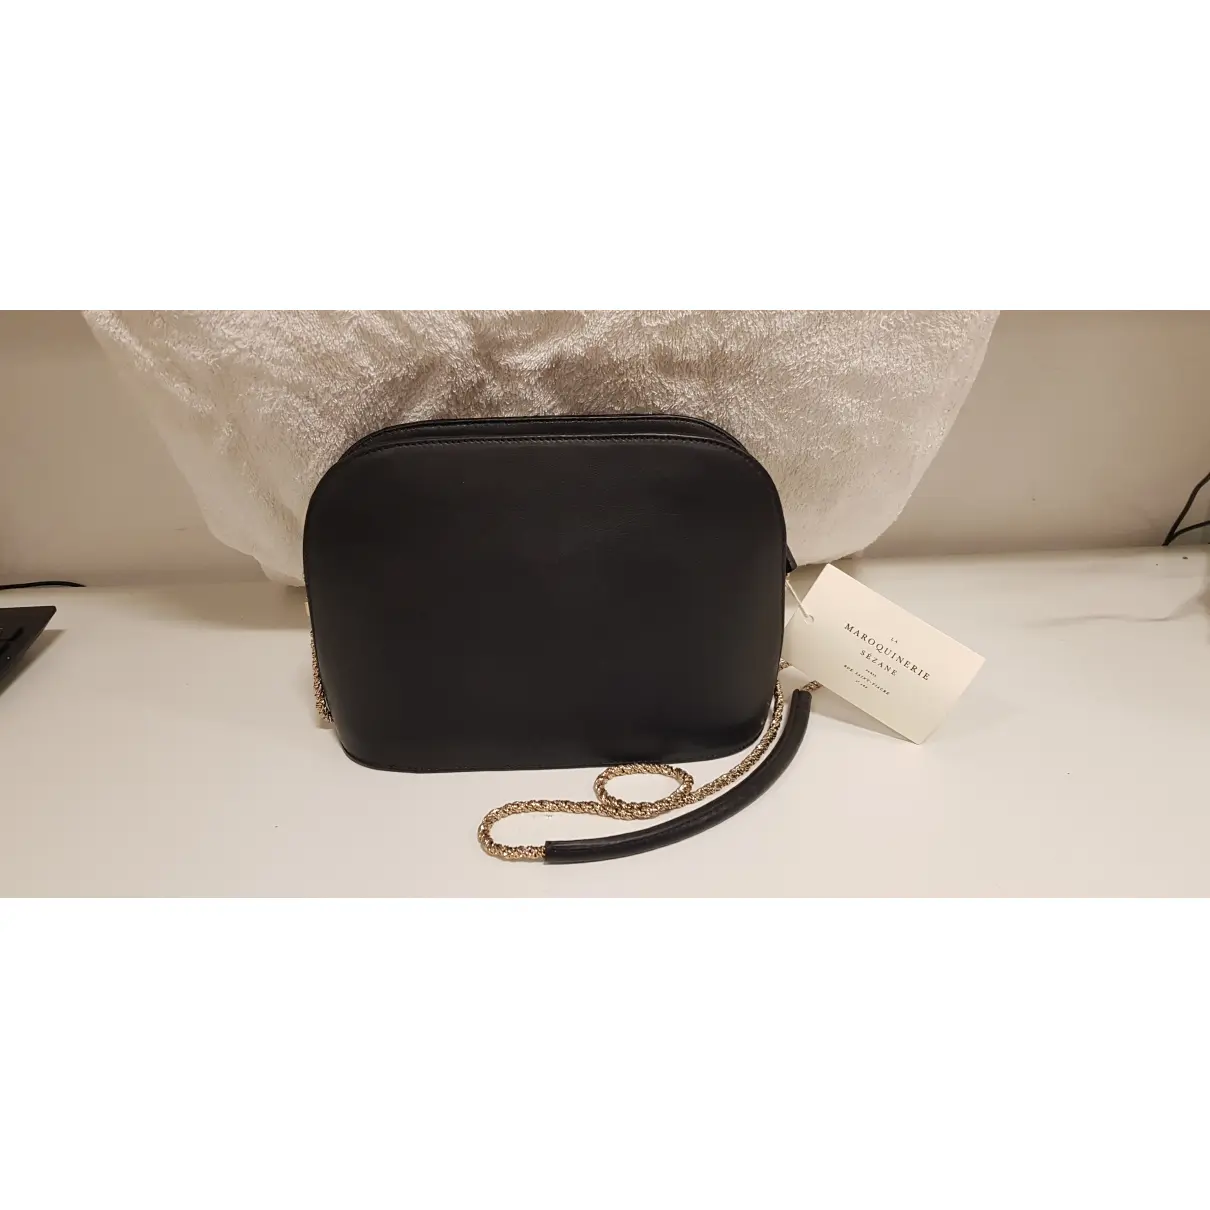 Buy Sézane Victor leather handbag online